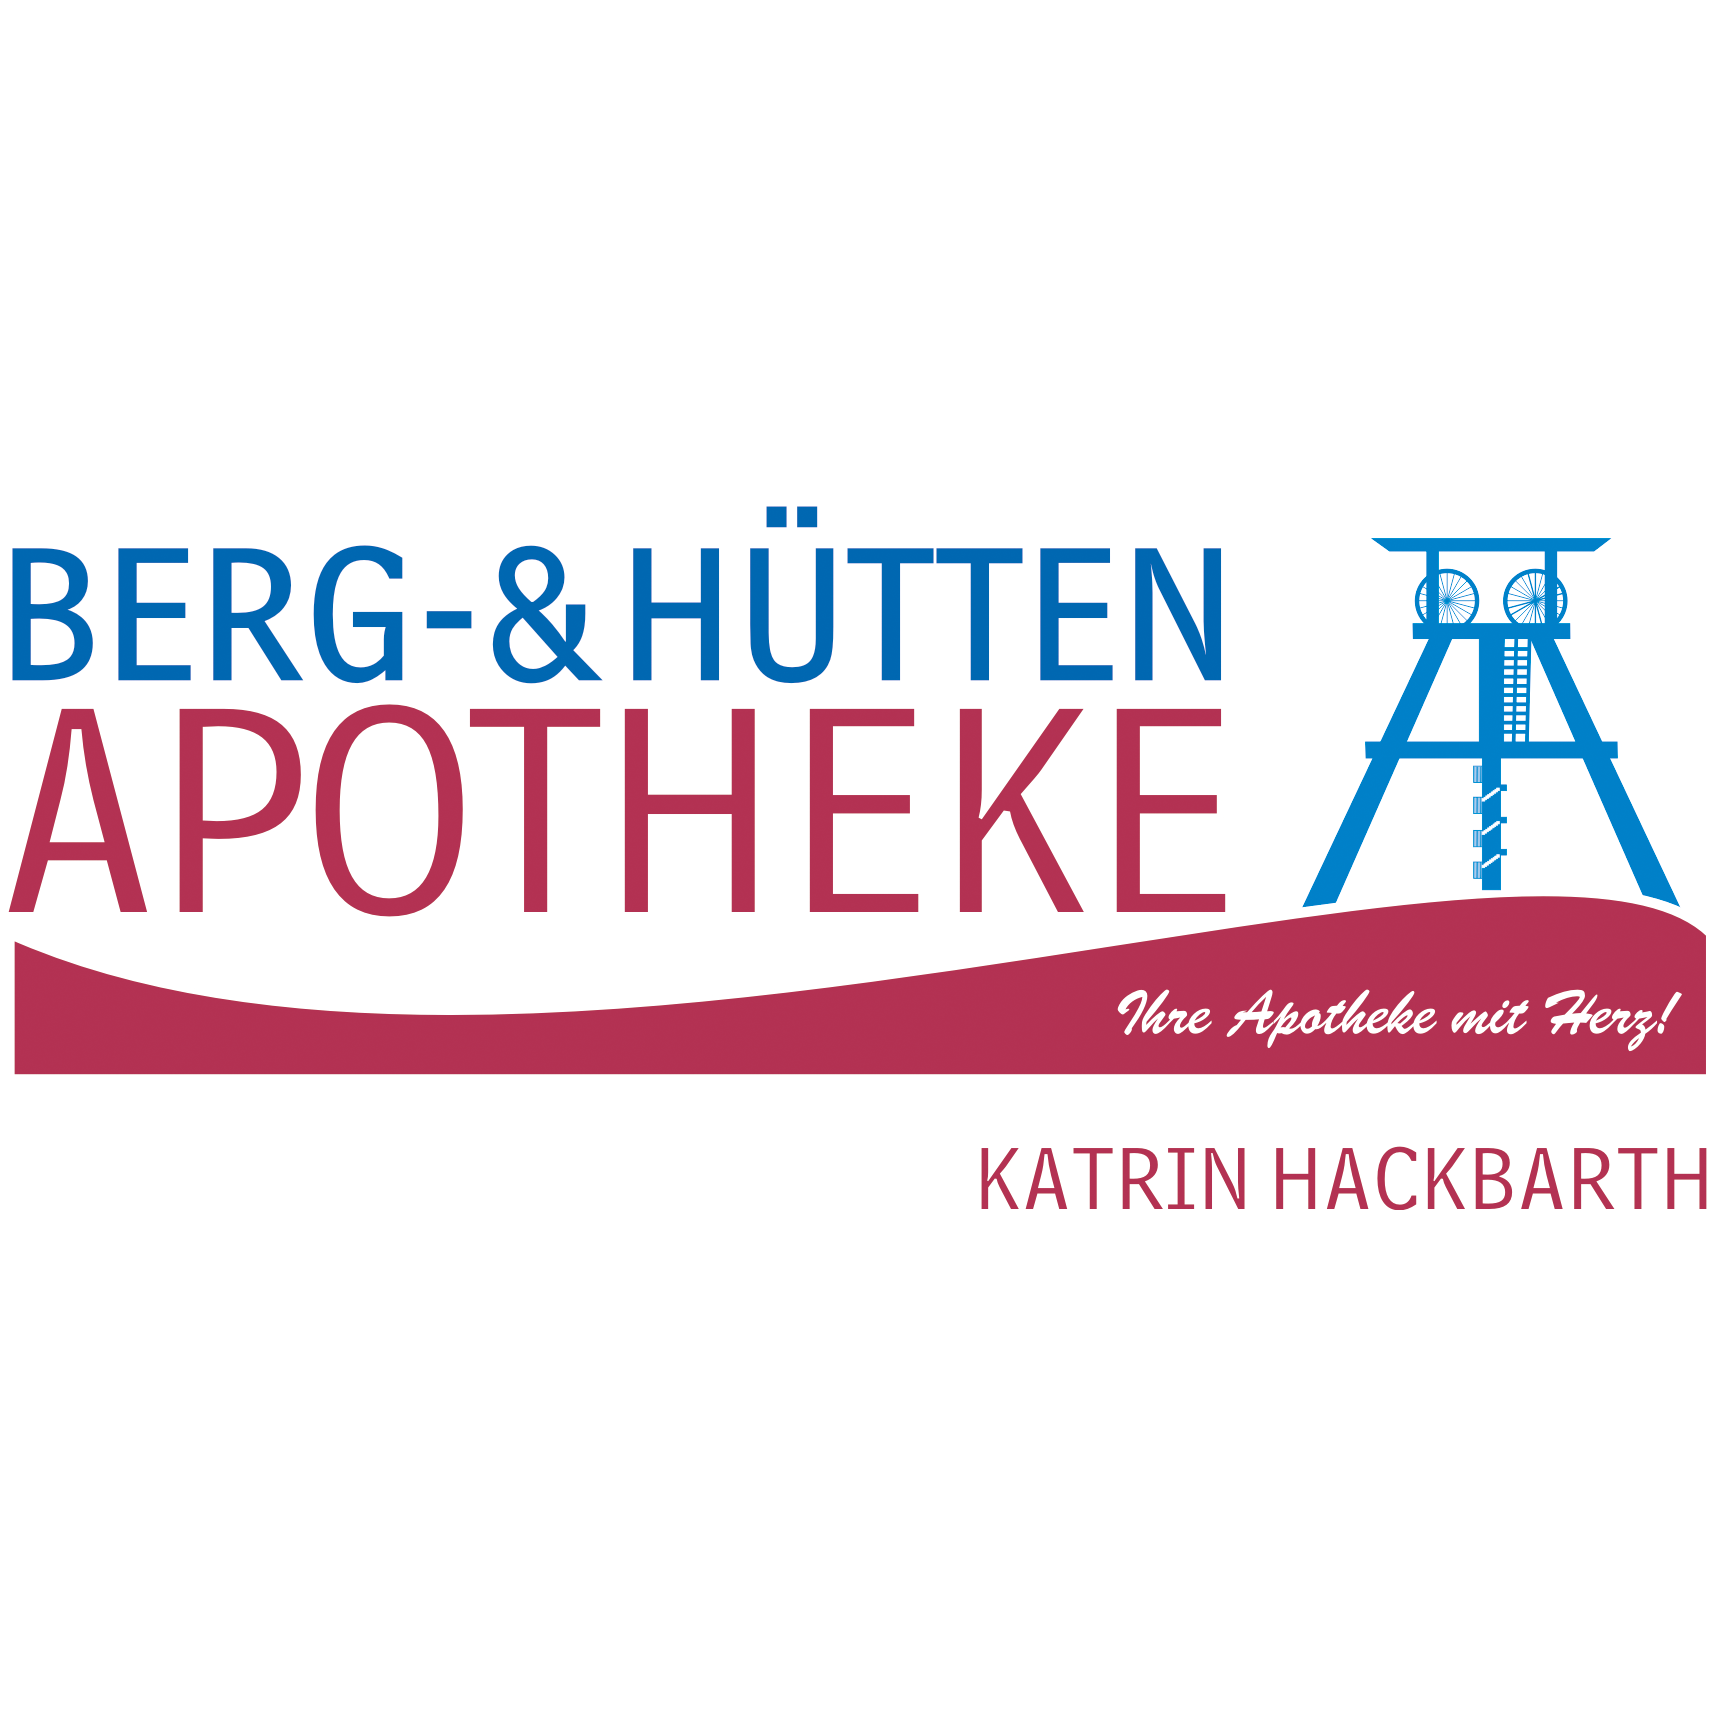 Berg- und Hütten-Apotheke in Bochum - Logo